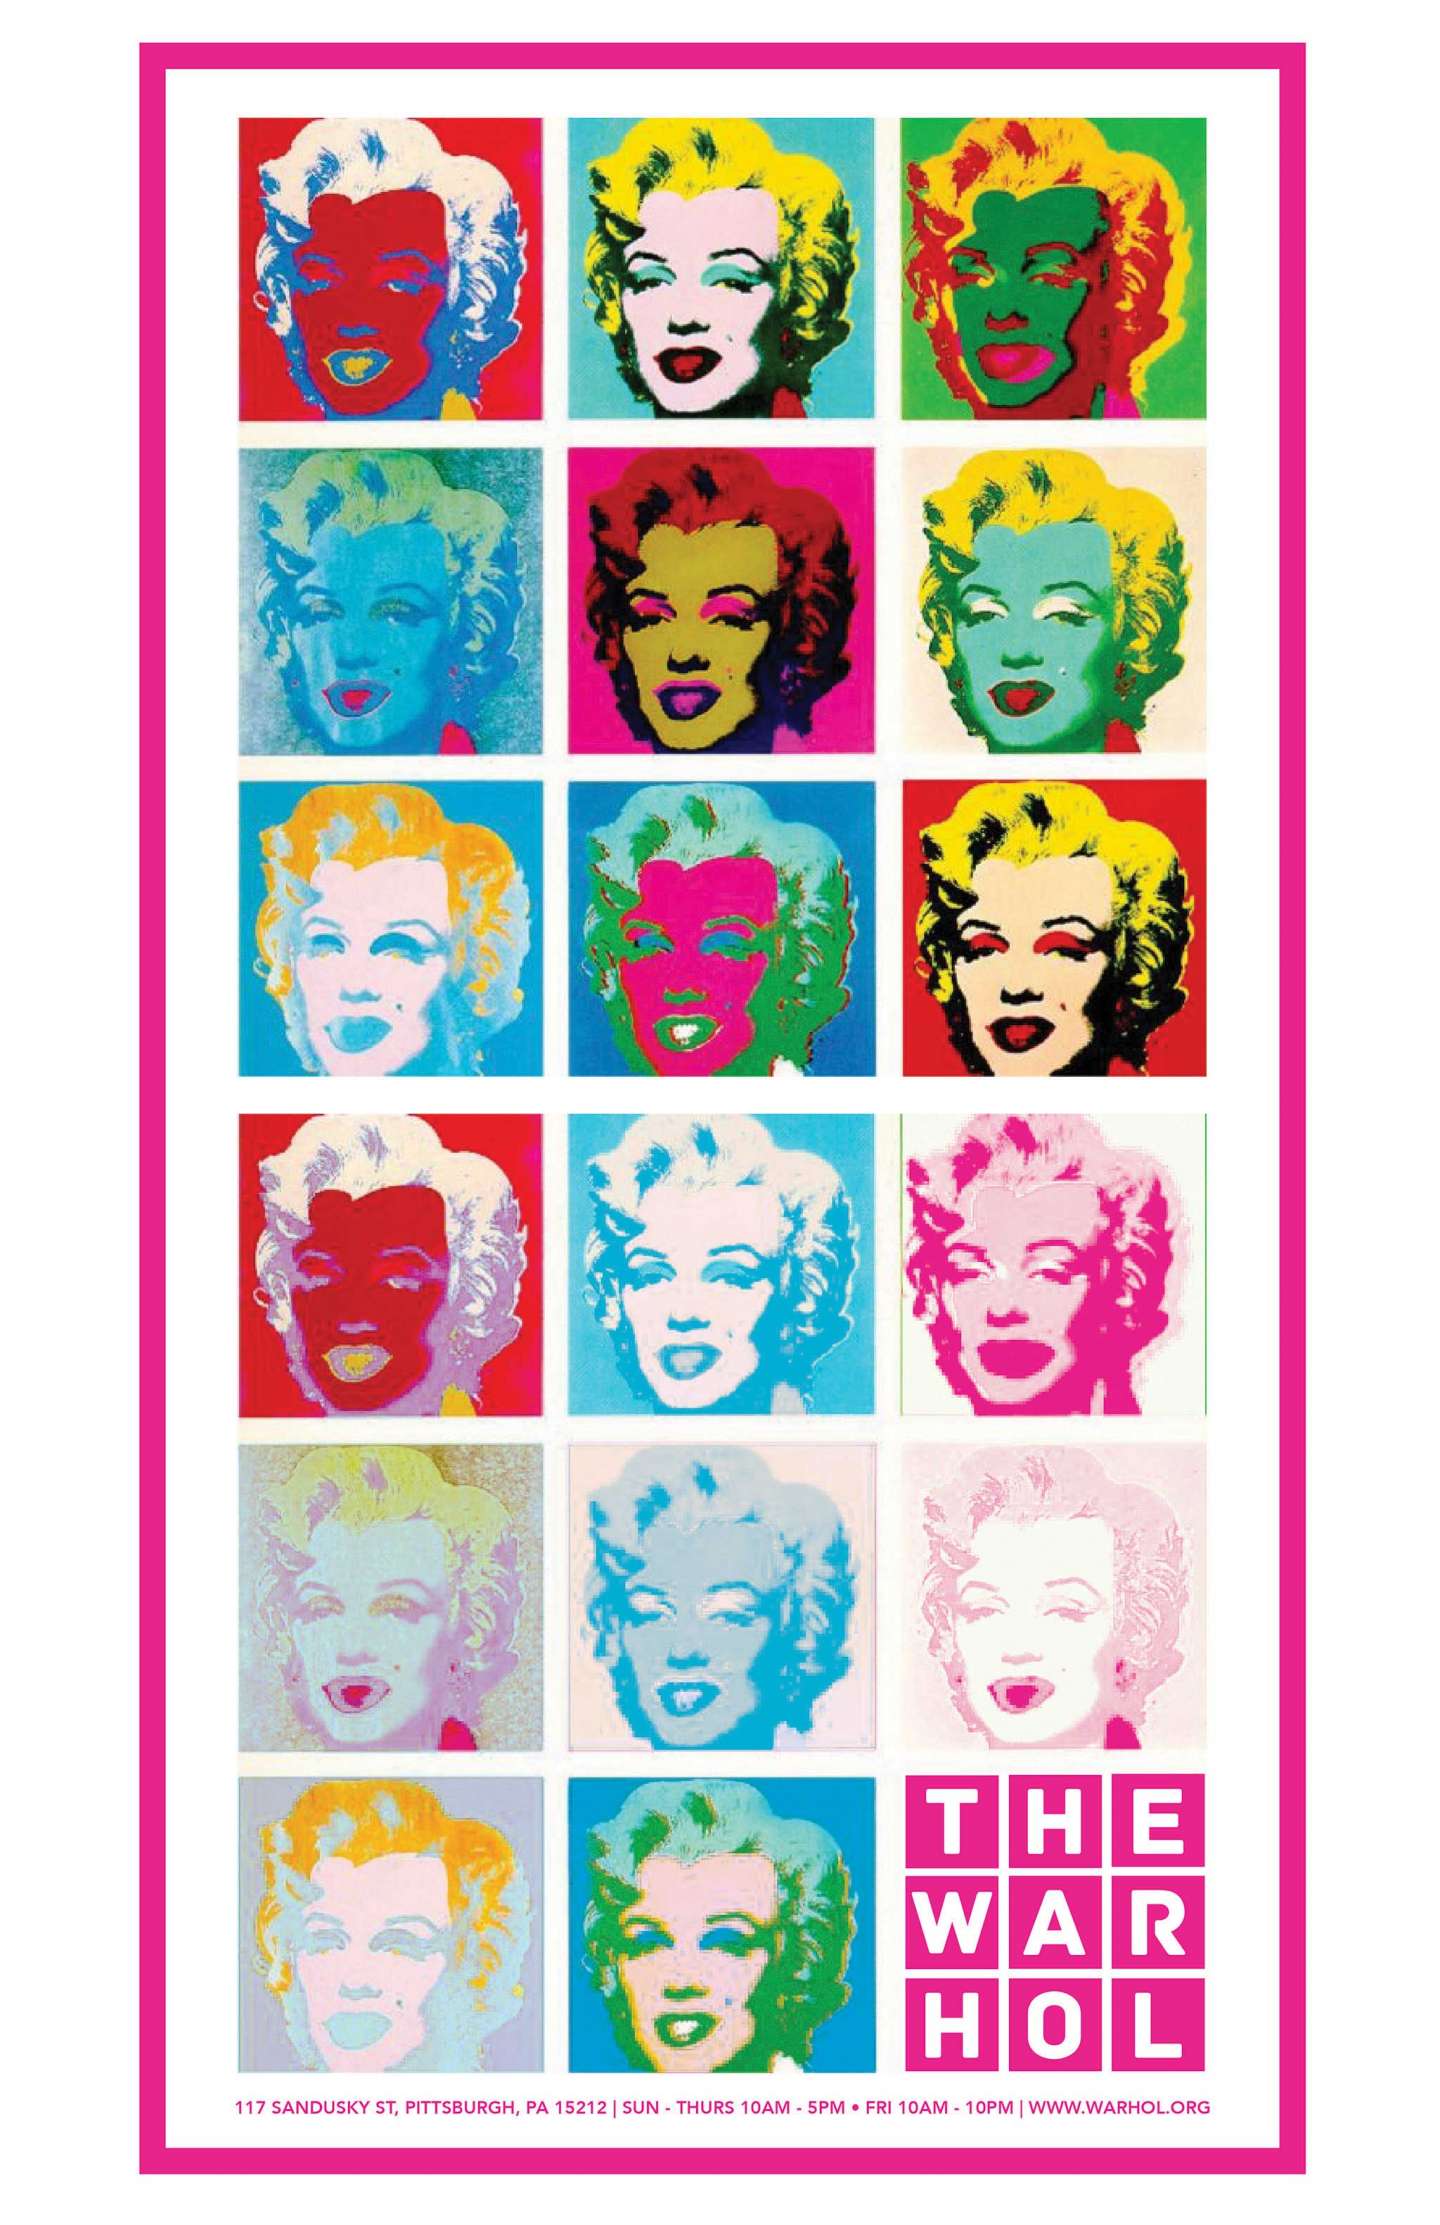 The Warhol Re-branding